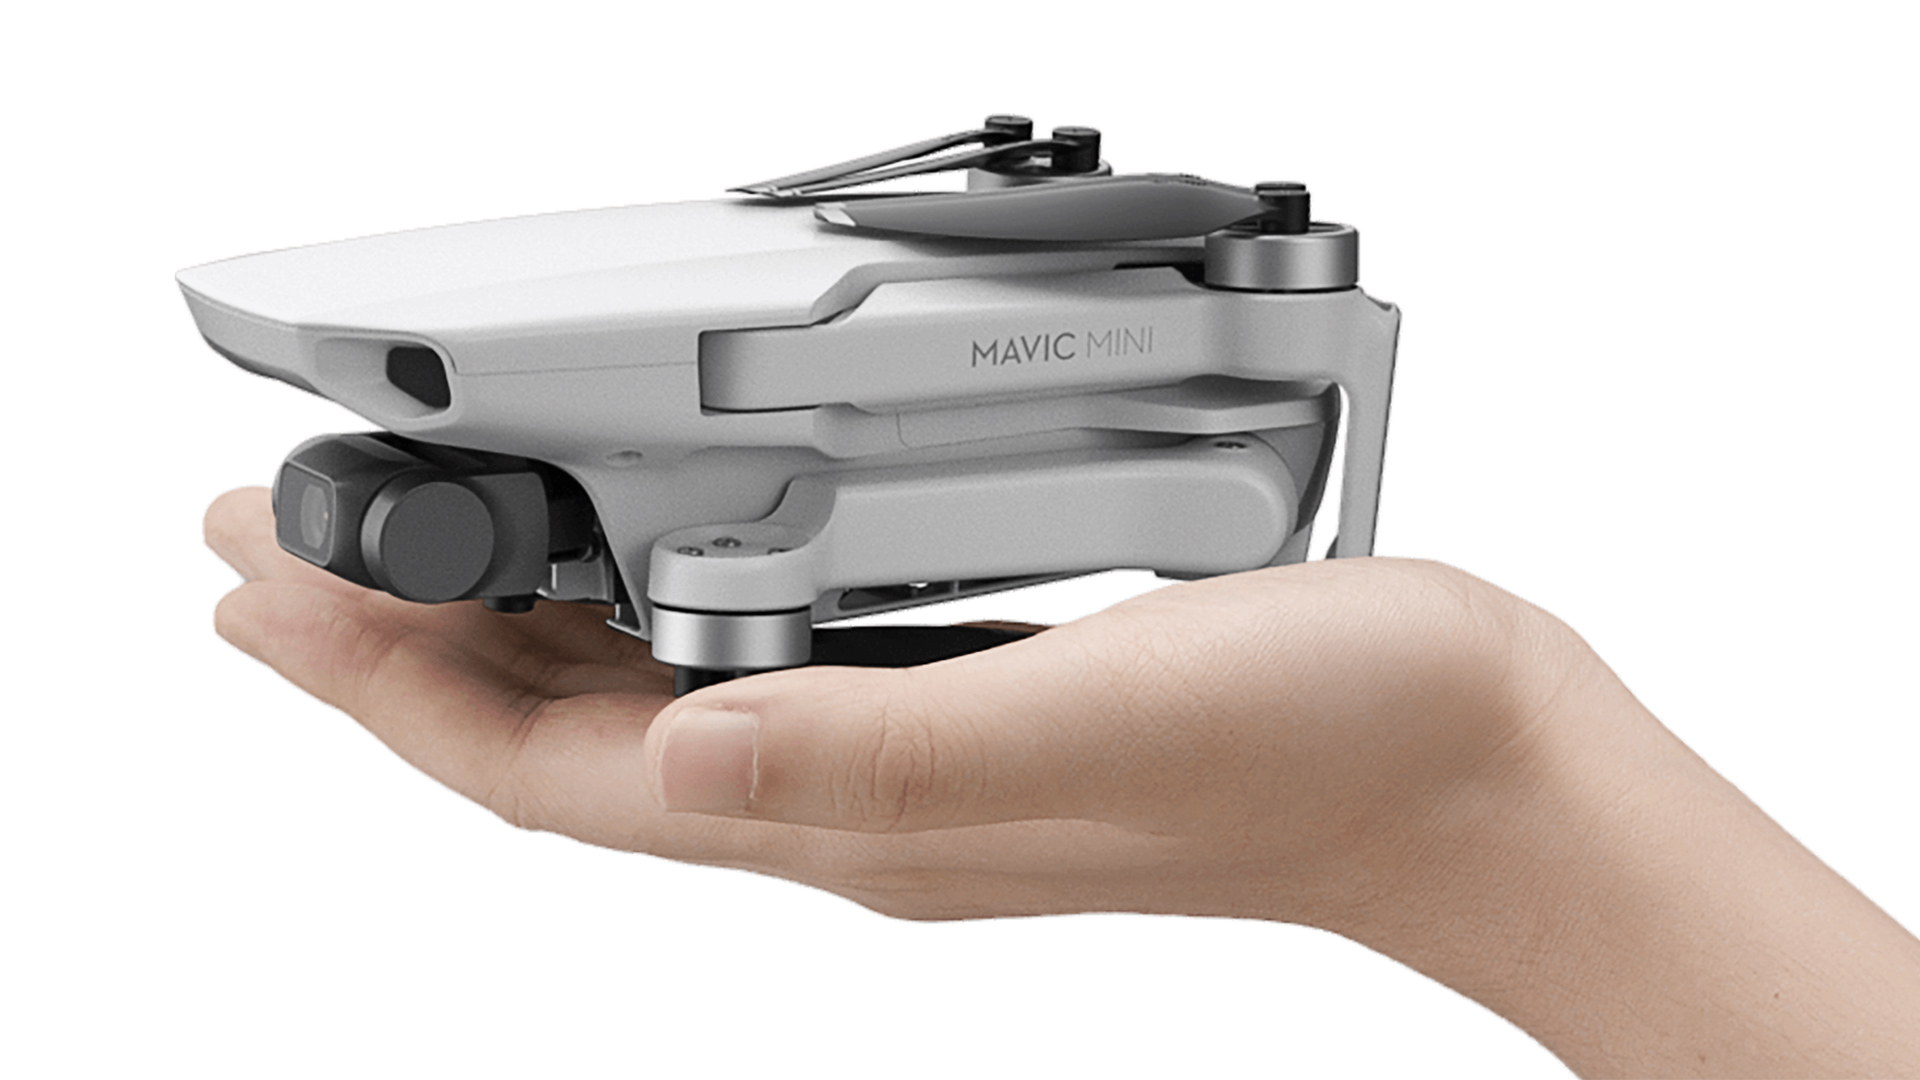 DJI announces the incredibly compact, yet capable, Mavic Mini